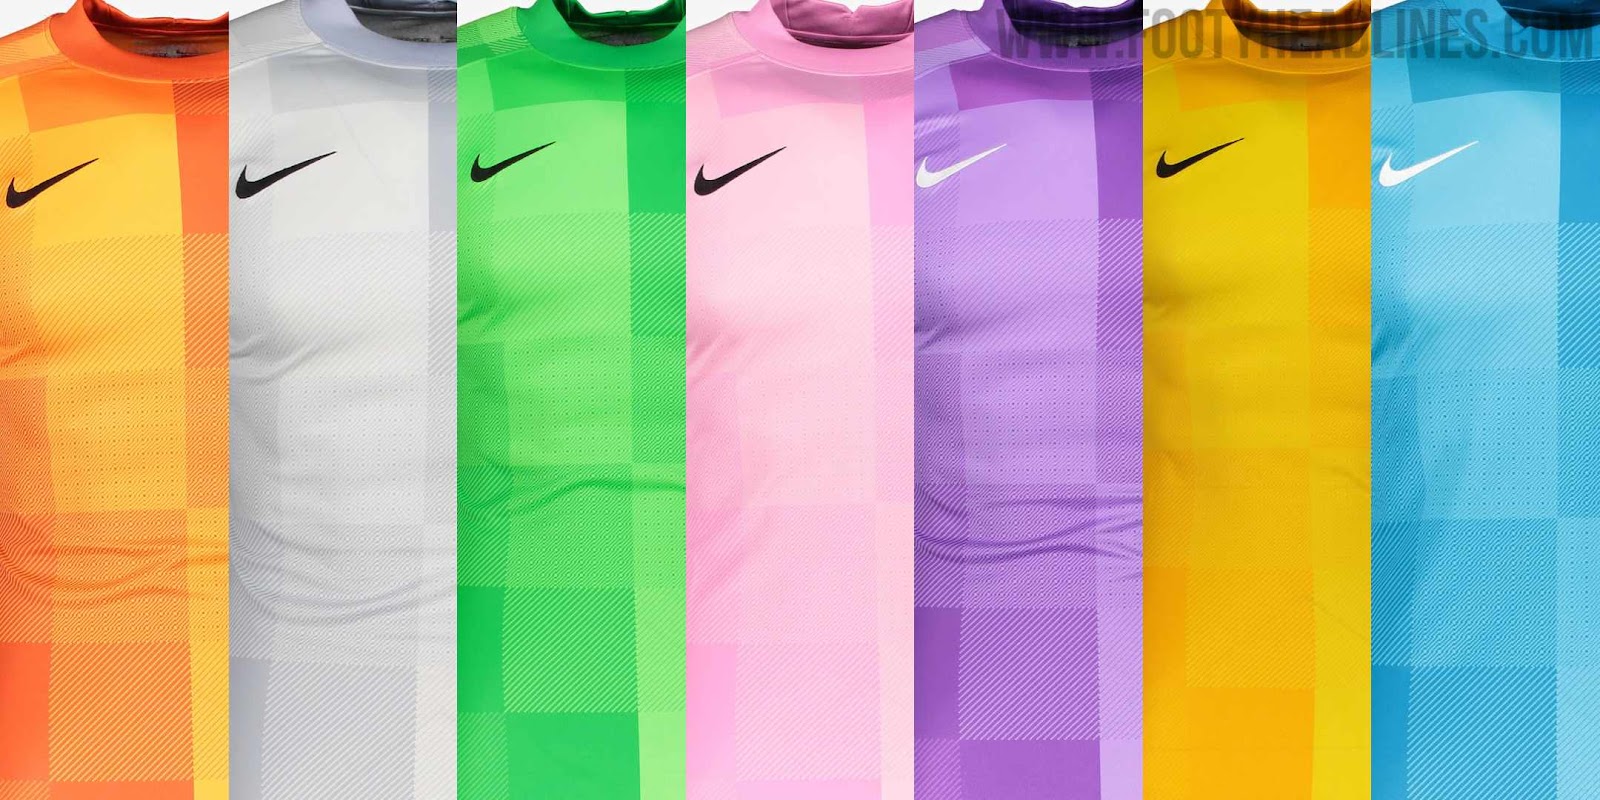 Por Componer derrota Nike 21-22 Promo Goalkeeper Kit "Leaked" - Footy Headlines